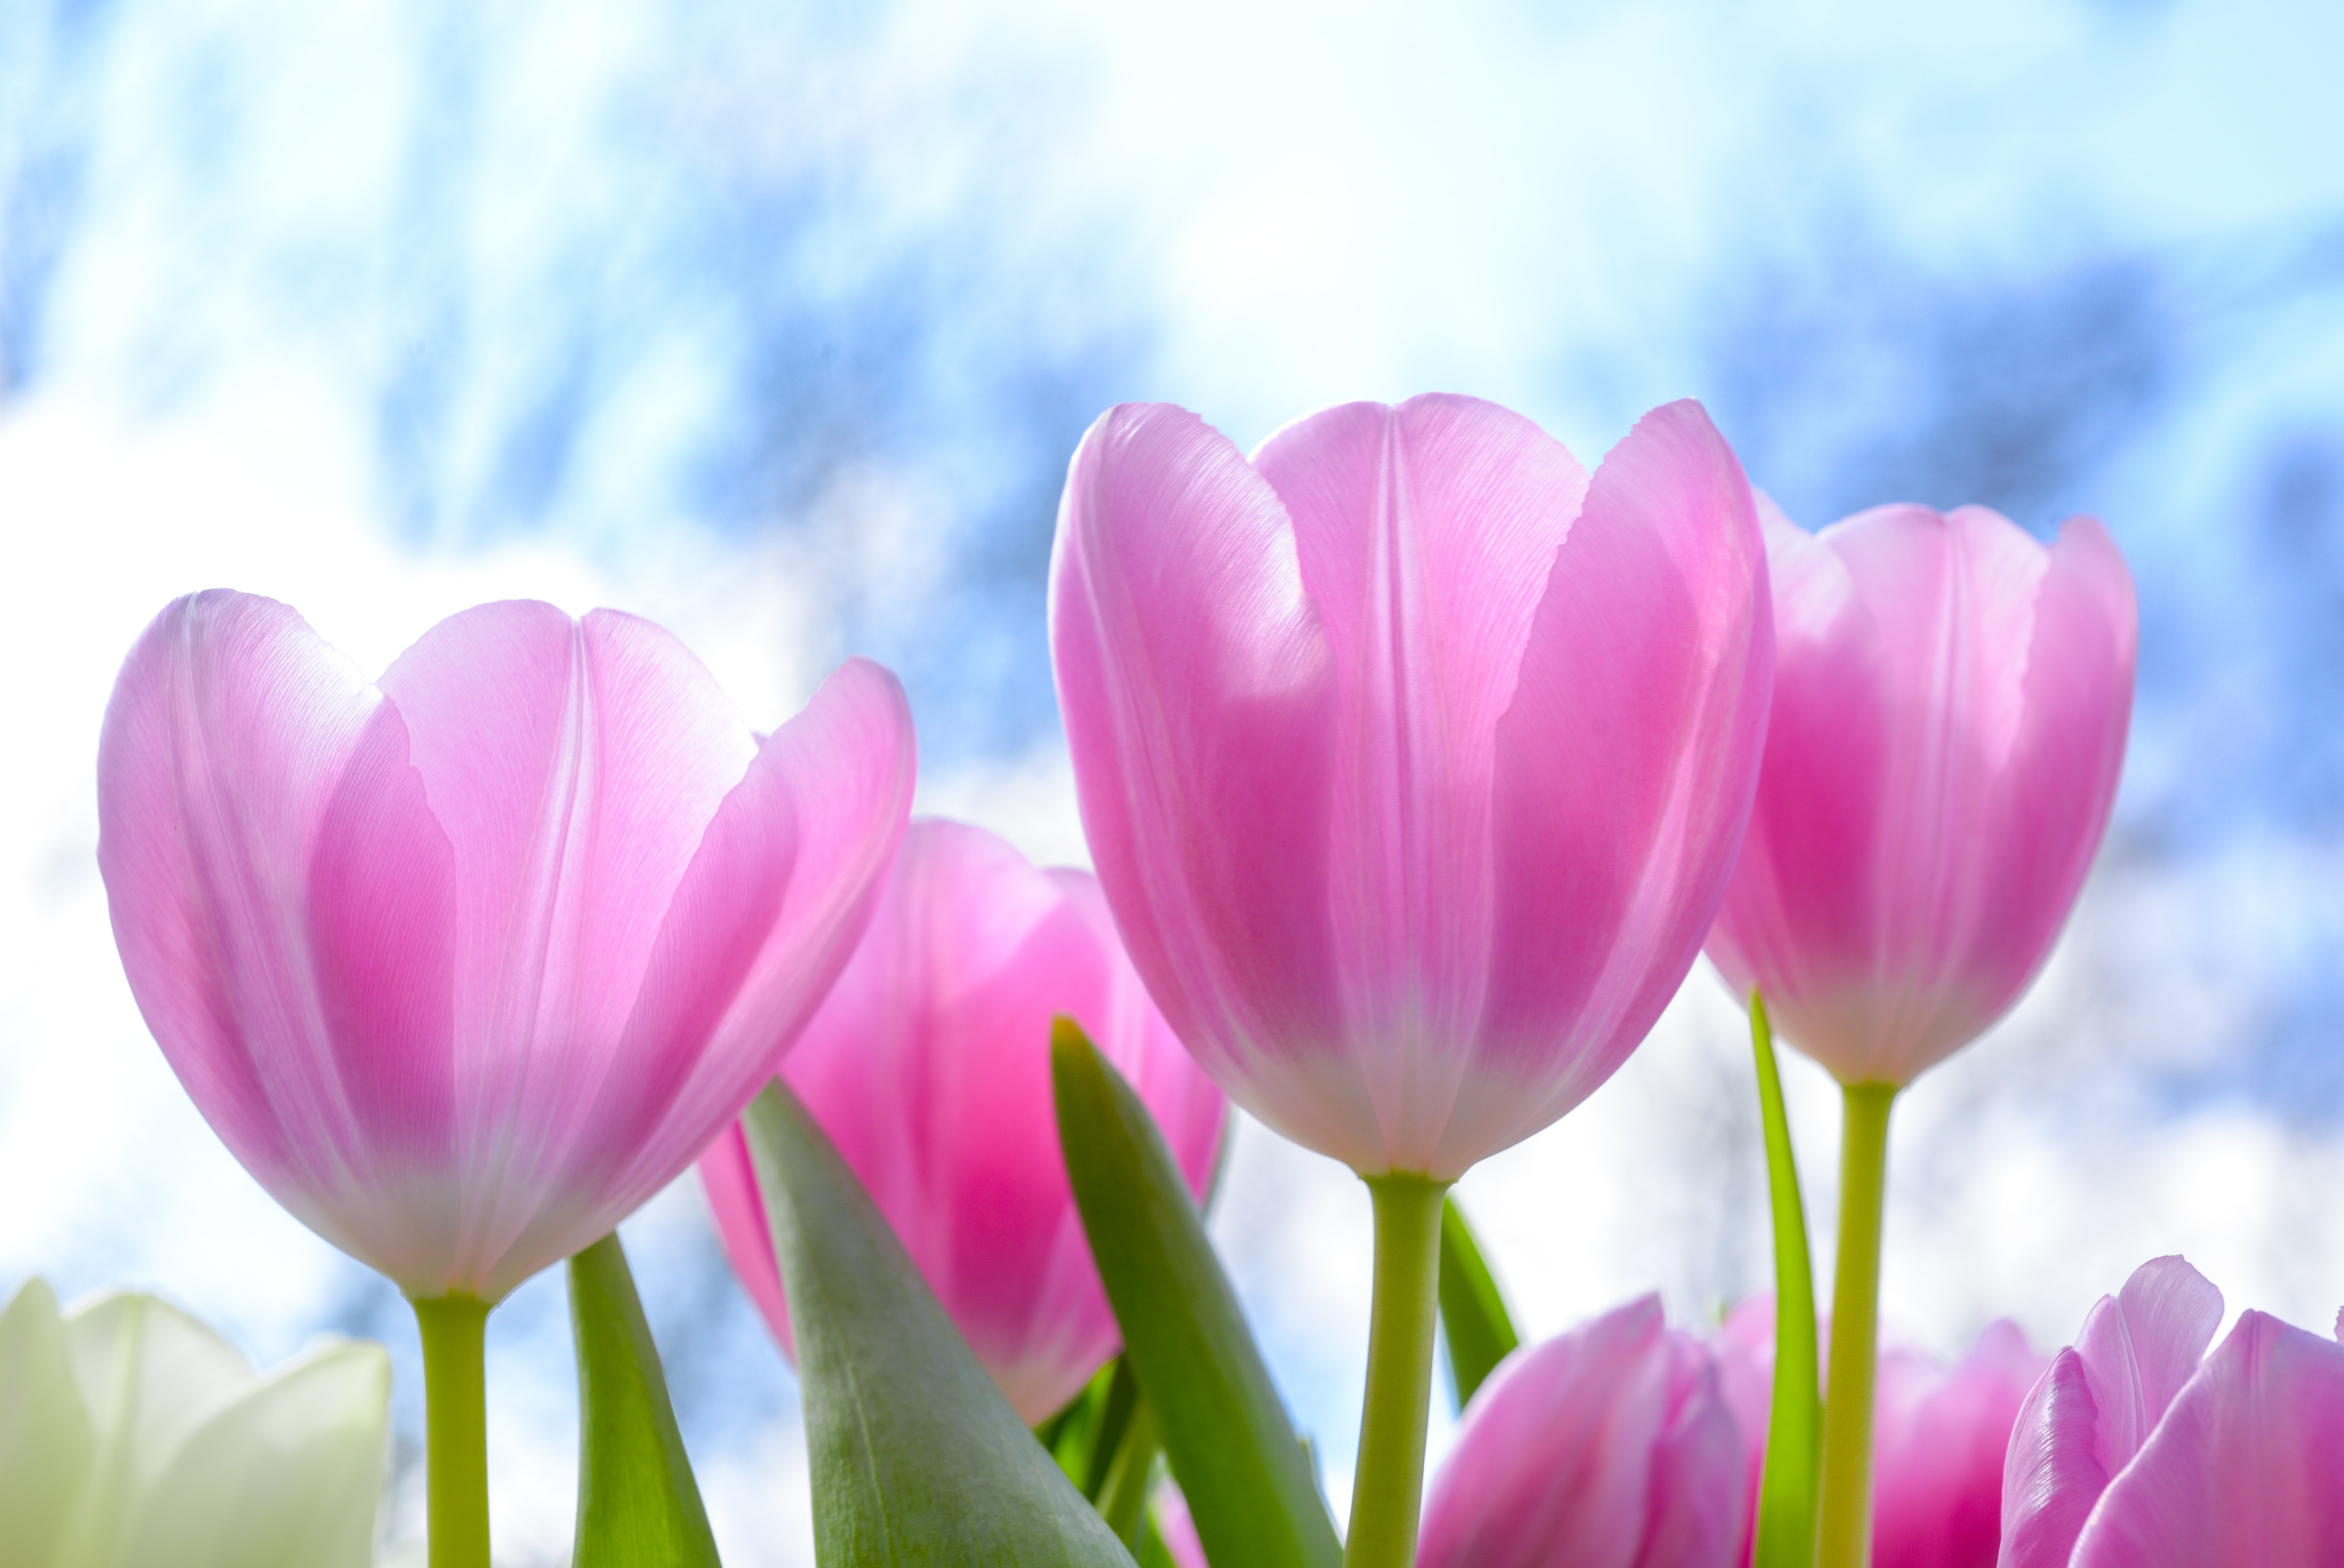 200+ Great Tulips Photos · Pexels · Free Stock Photos